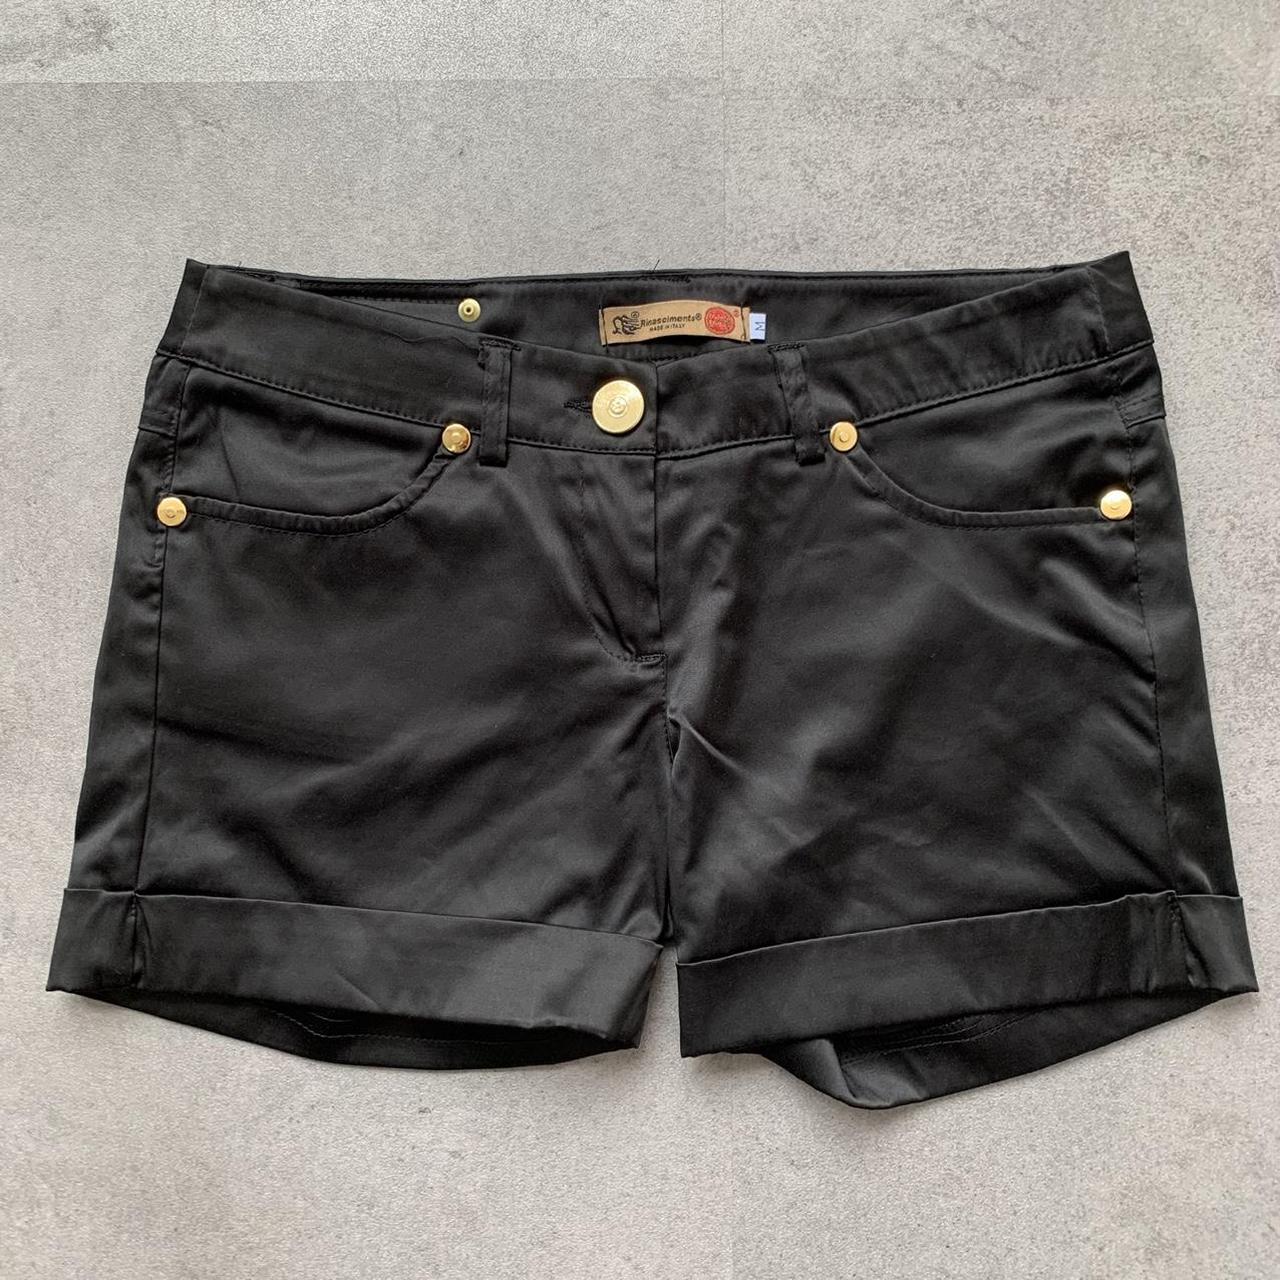 Black satin booty shorts by Rinascimento ⚜️ Mid... - Depop